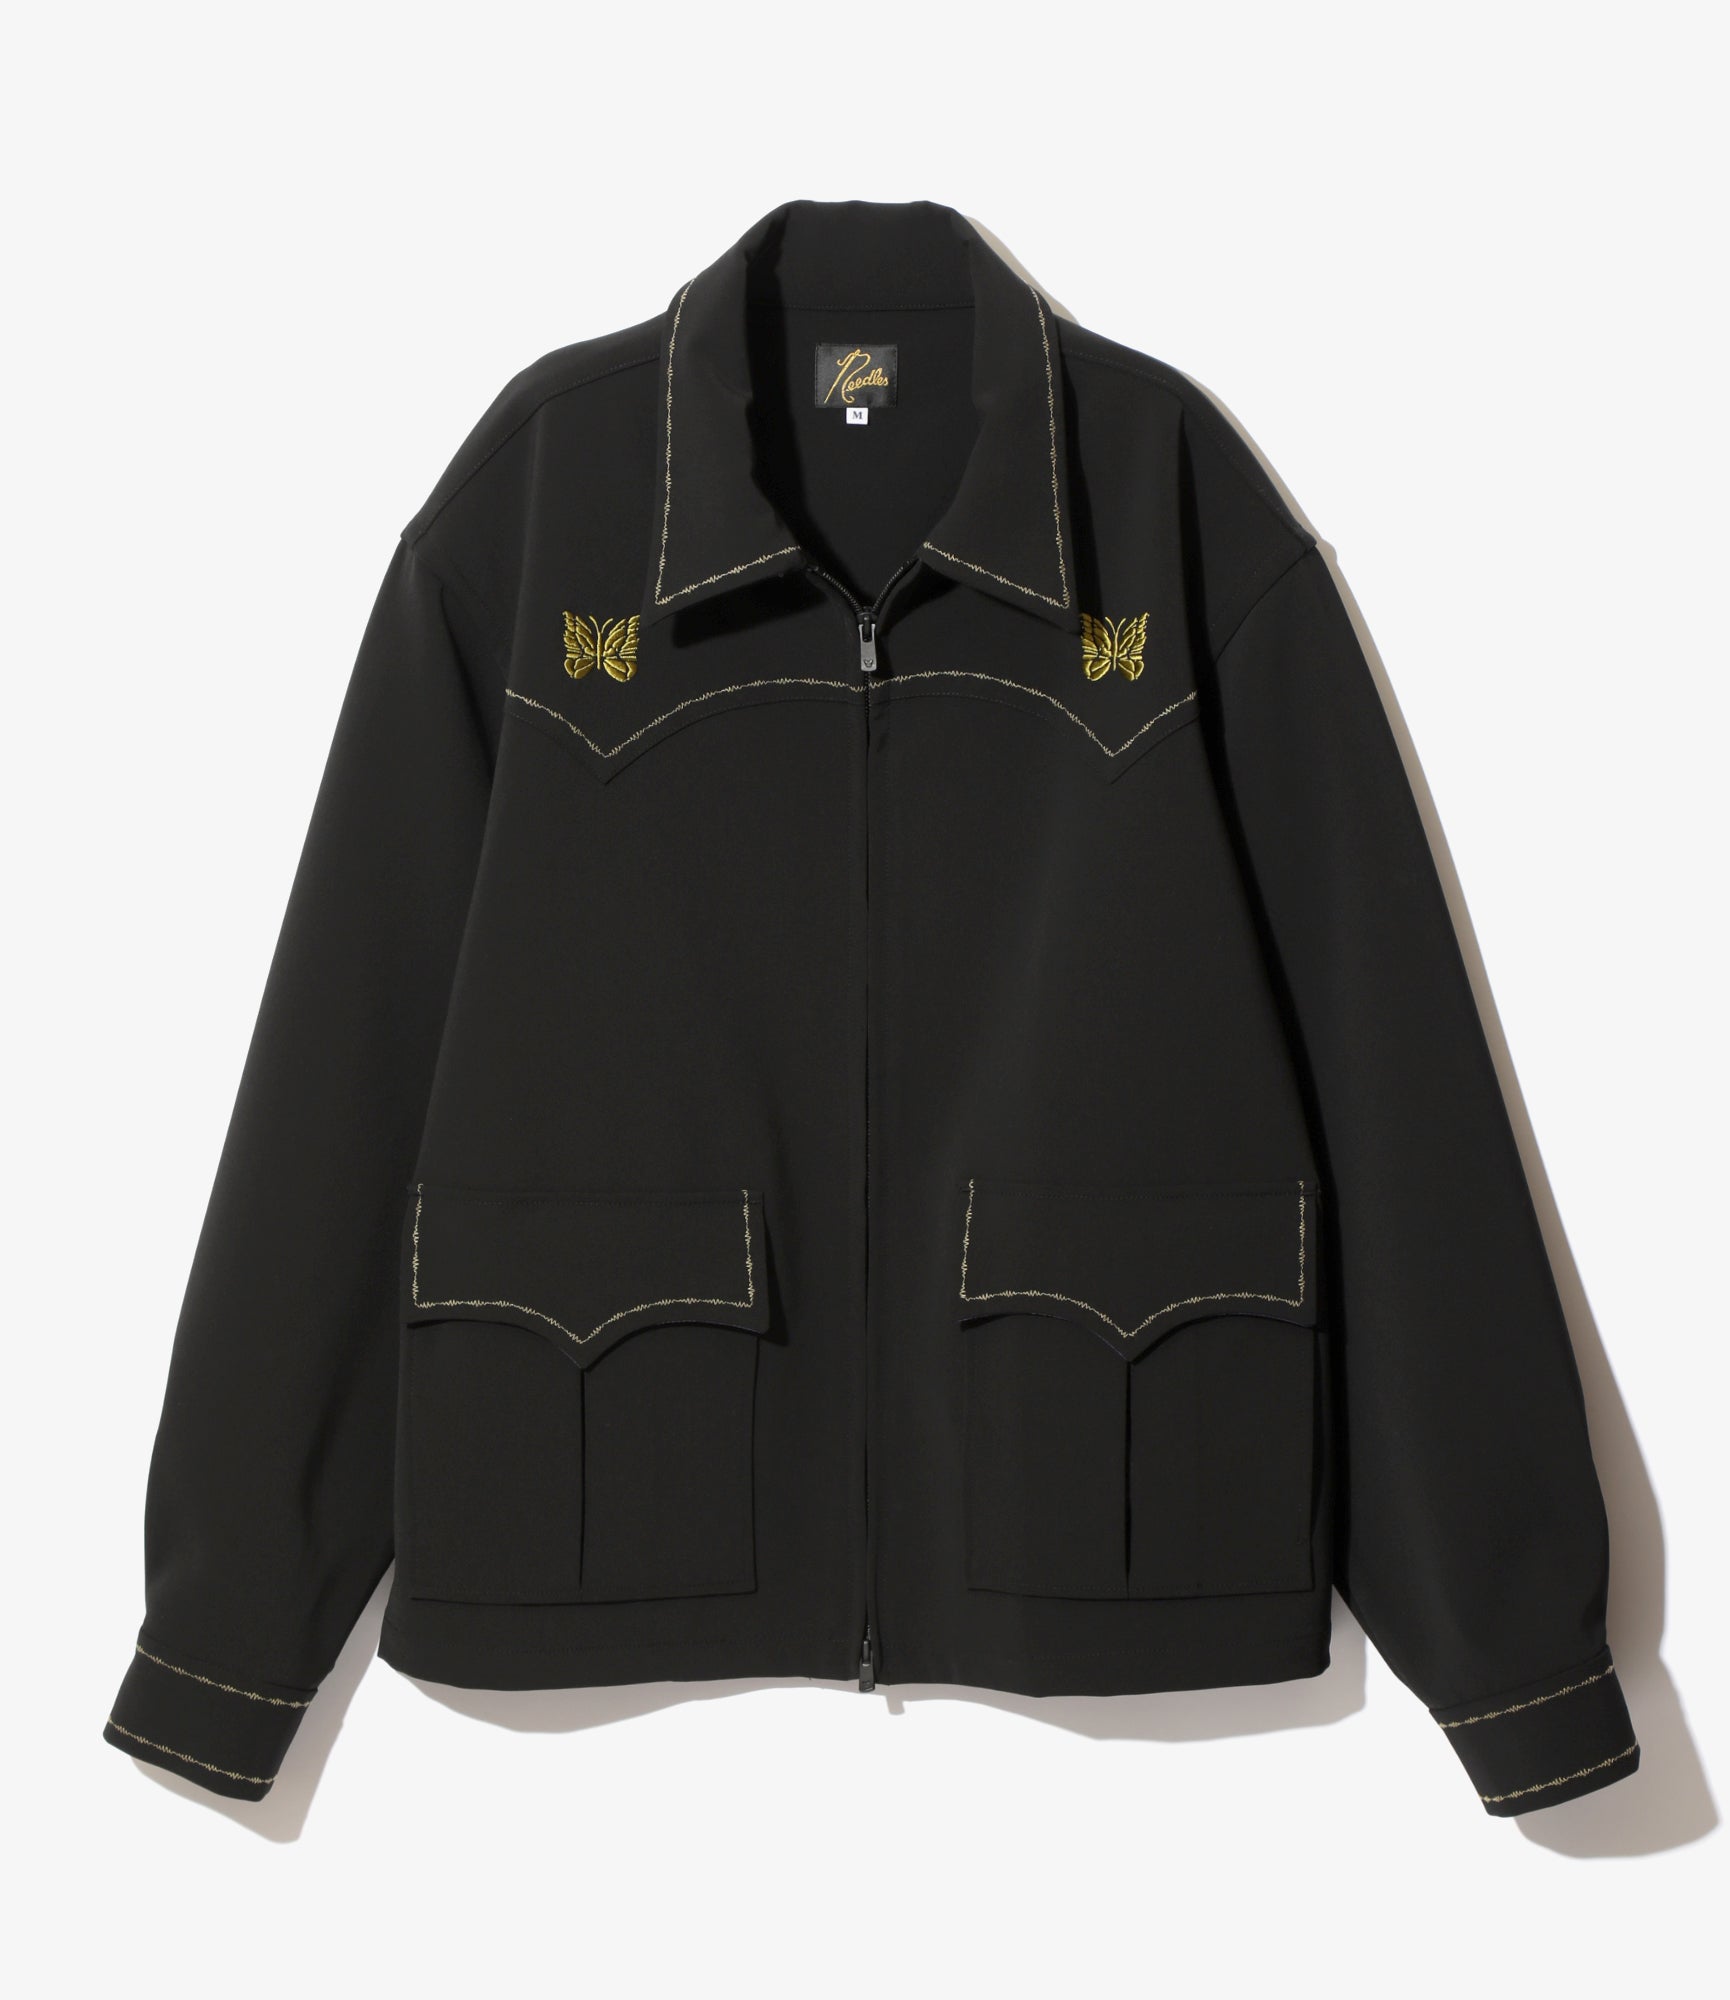 Western Sport Jacket - Black - PE/PU Double Cloth